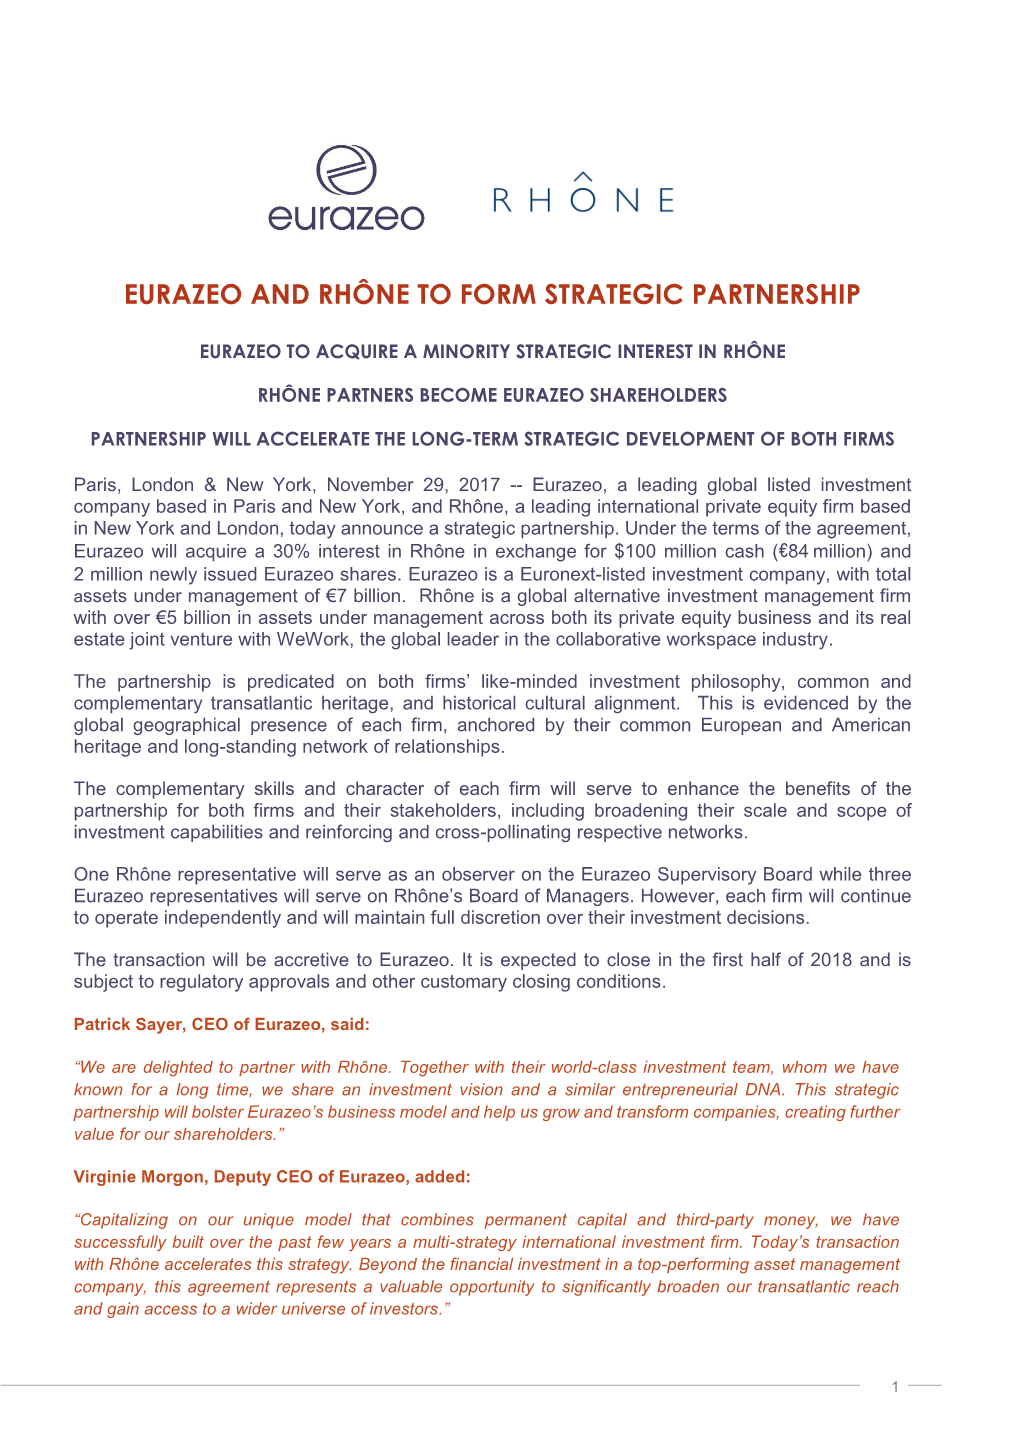 Eurazeo and Rhône to Form Strategic Partnership